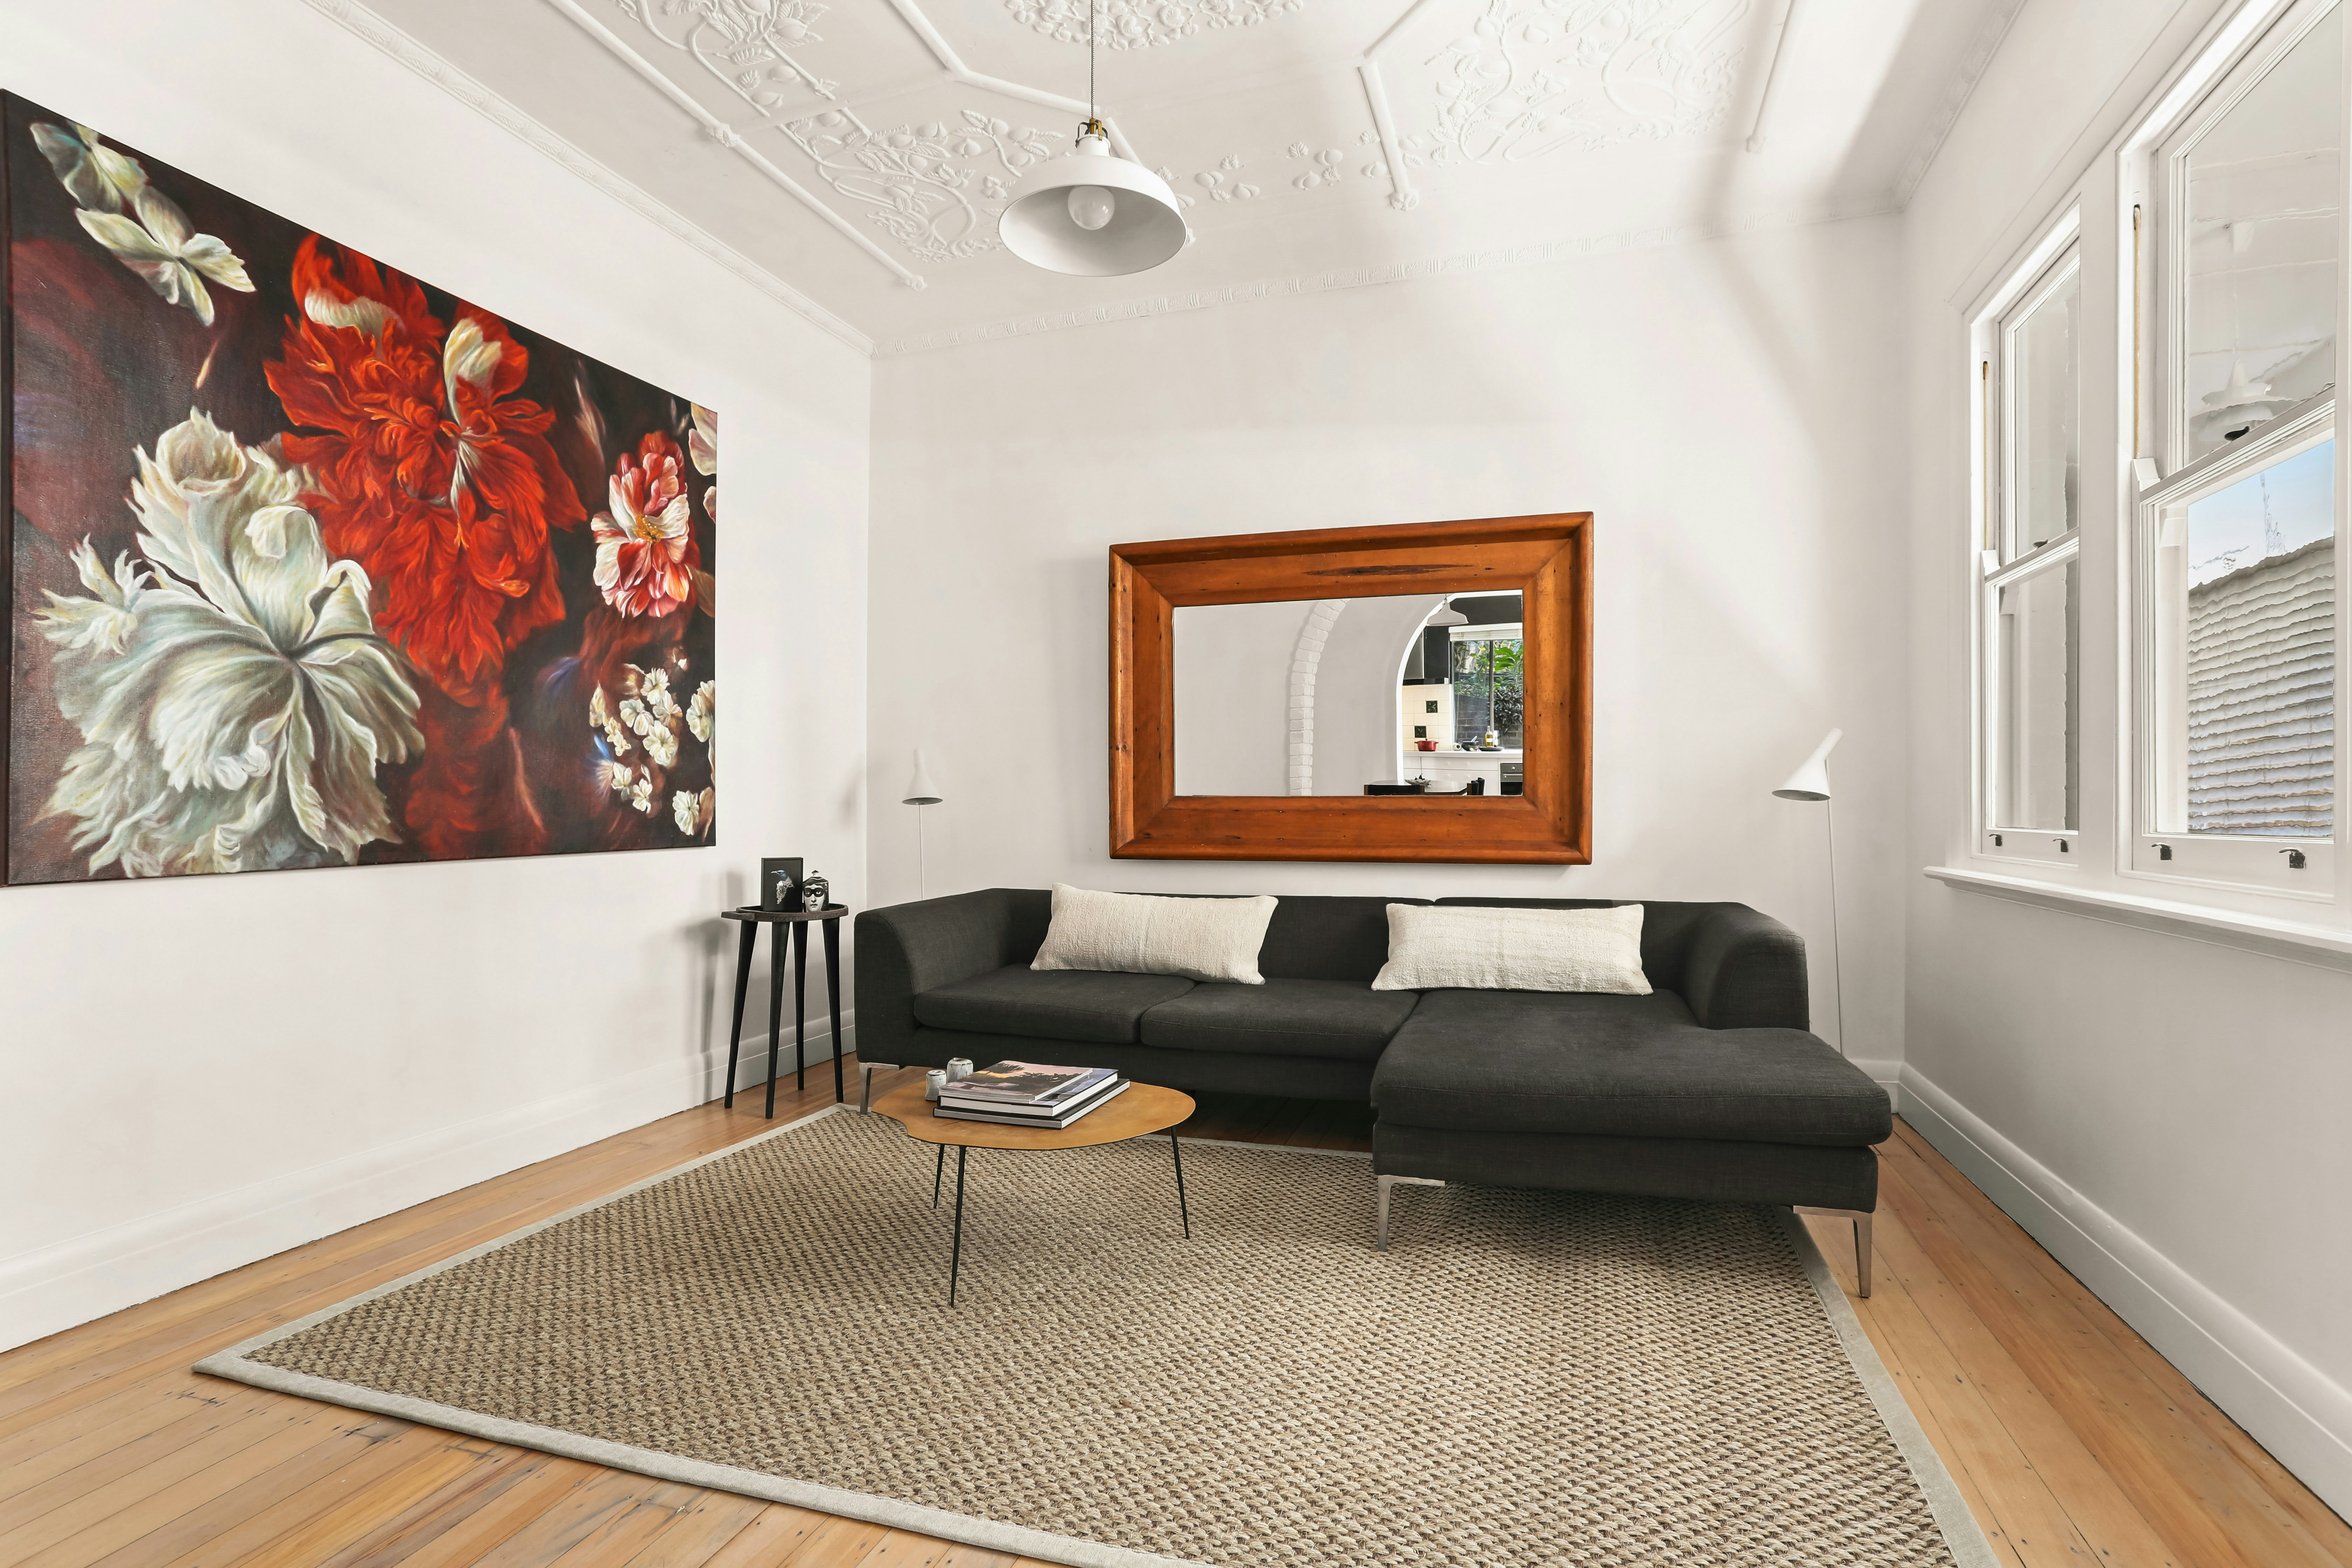 Image of home decor